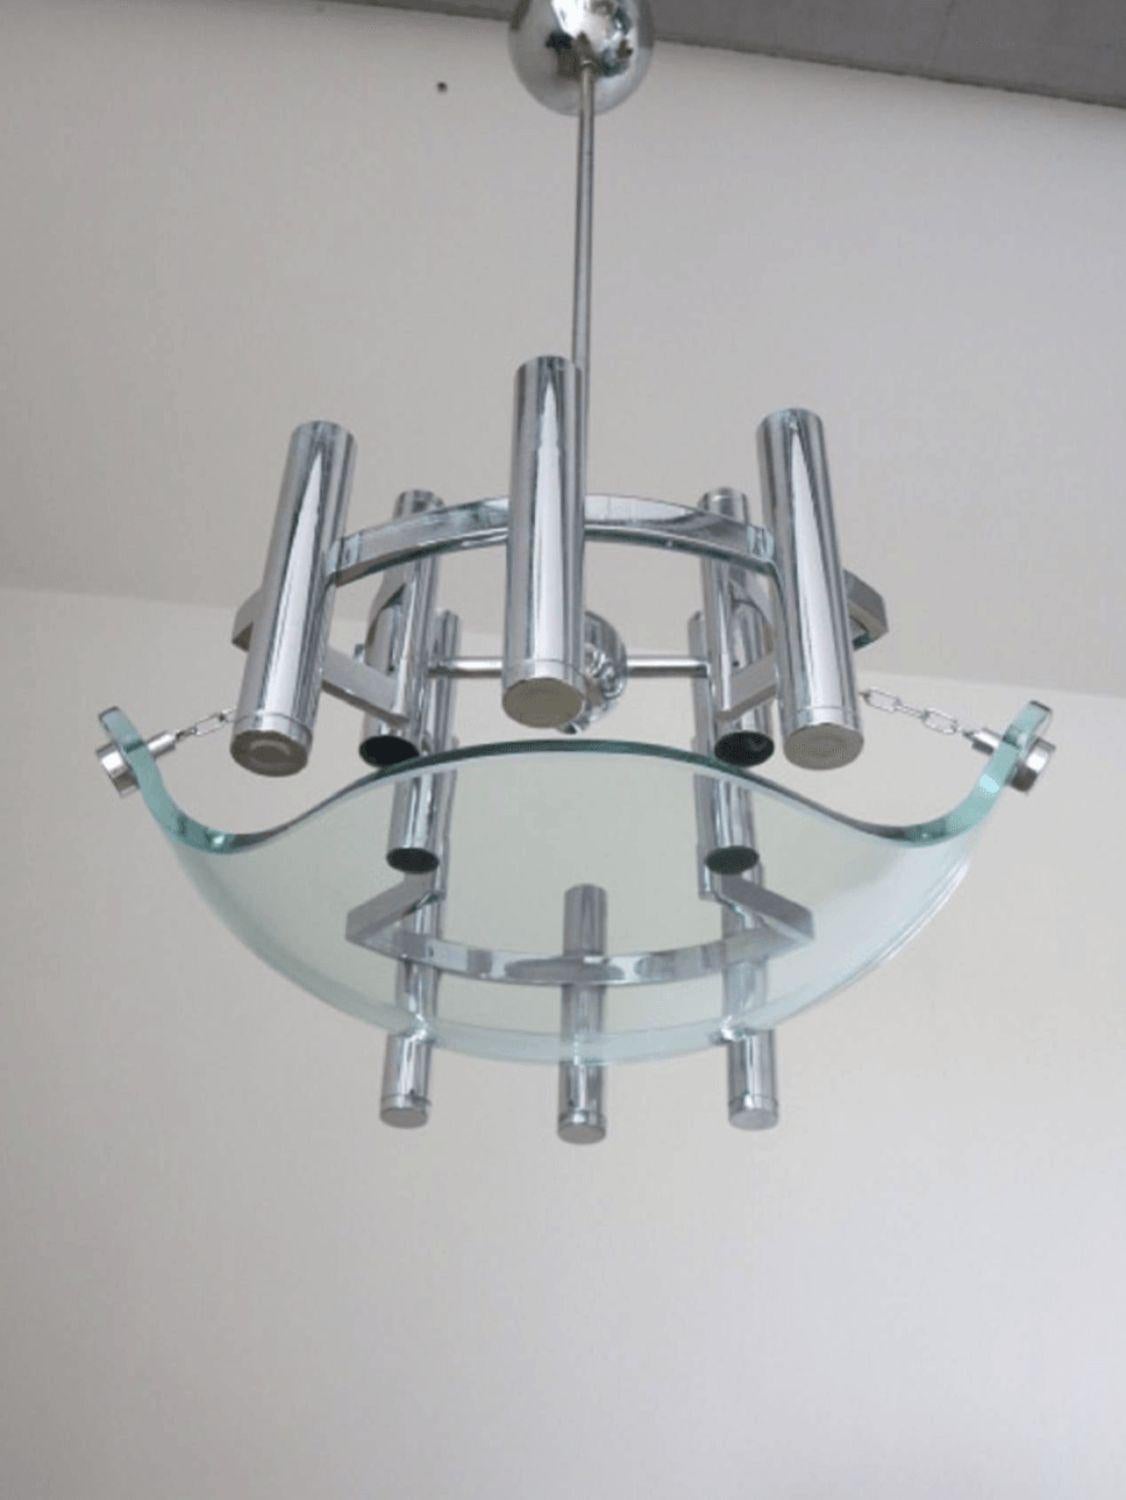 Whimsical Sciolari chandelier.
   